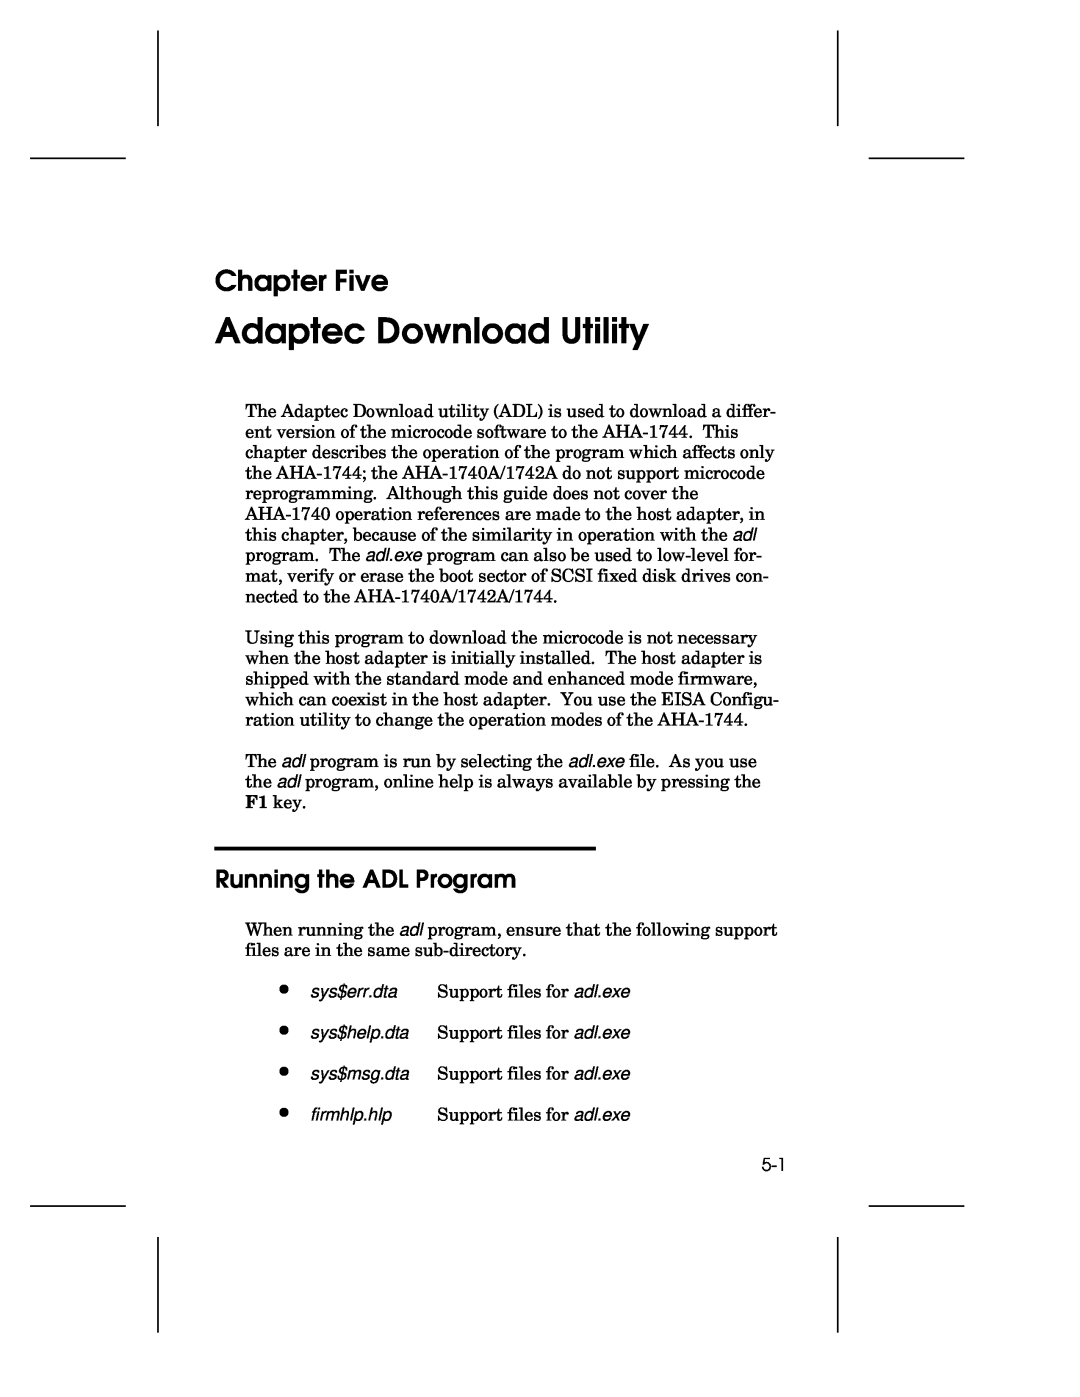 Adaptec 1742A, AHA-1740A, 1744 user manual Adaptec Download Utility, Chapter Five, Running the ADL Program, ∙ ∙ ∙ ∙ 